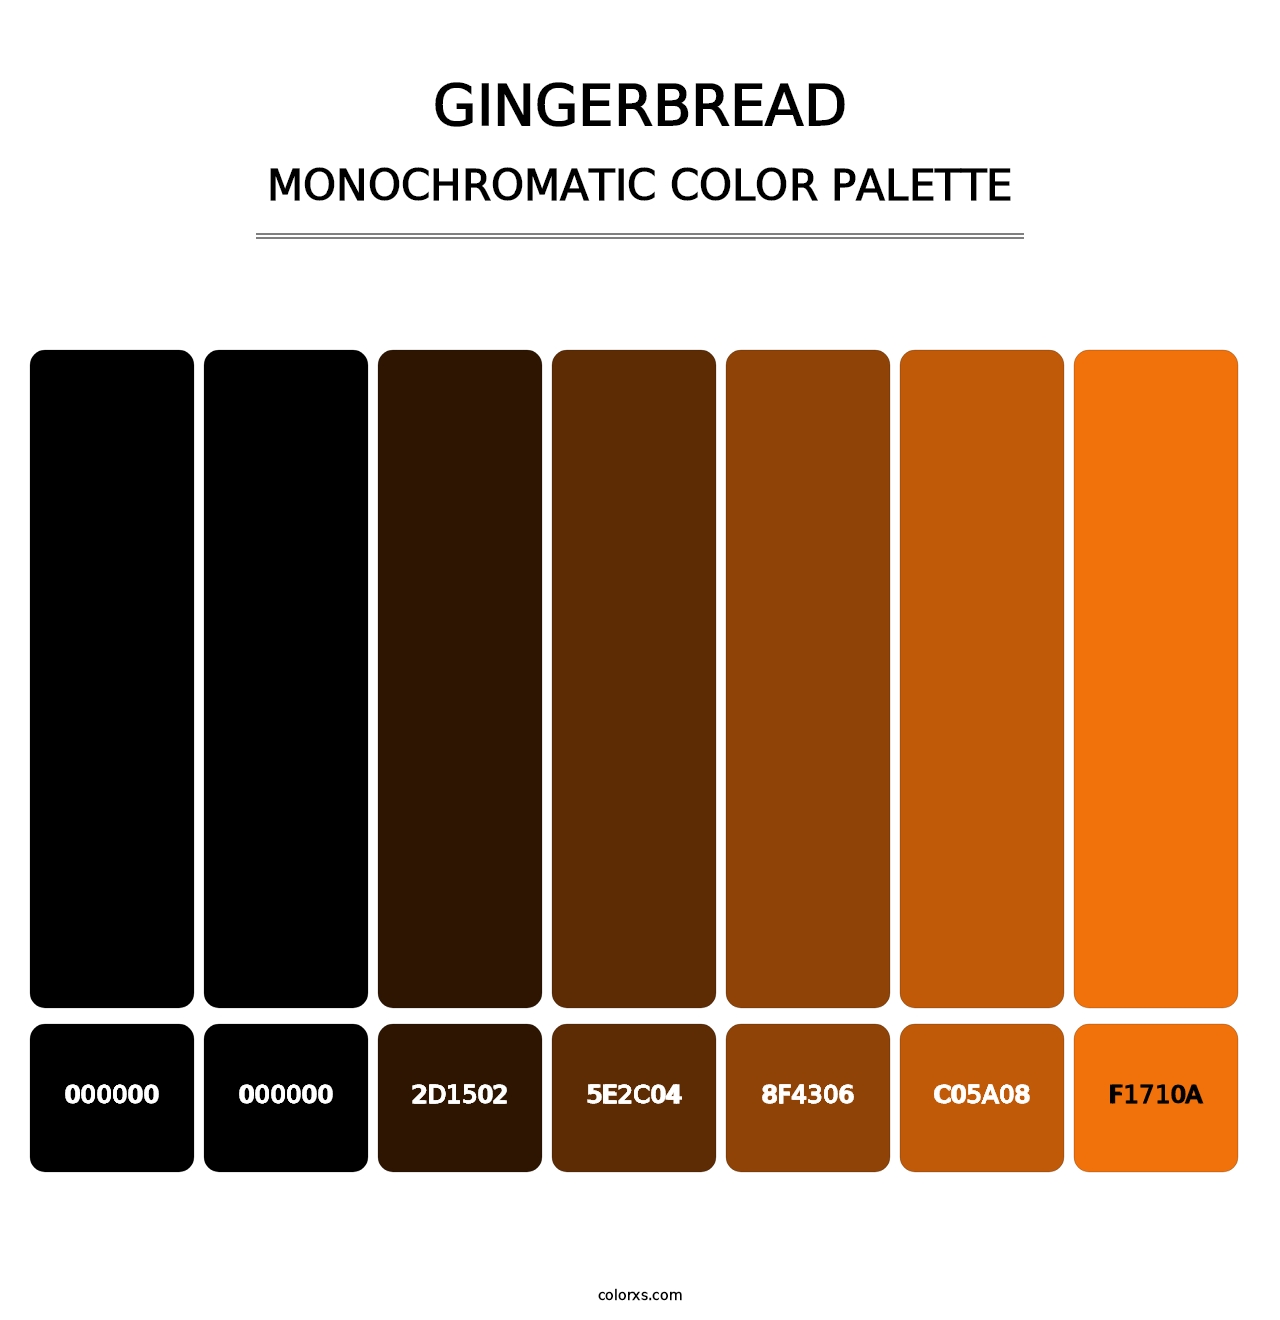 Gingerbread - Monochromatic Color Palette